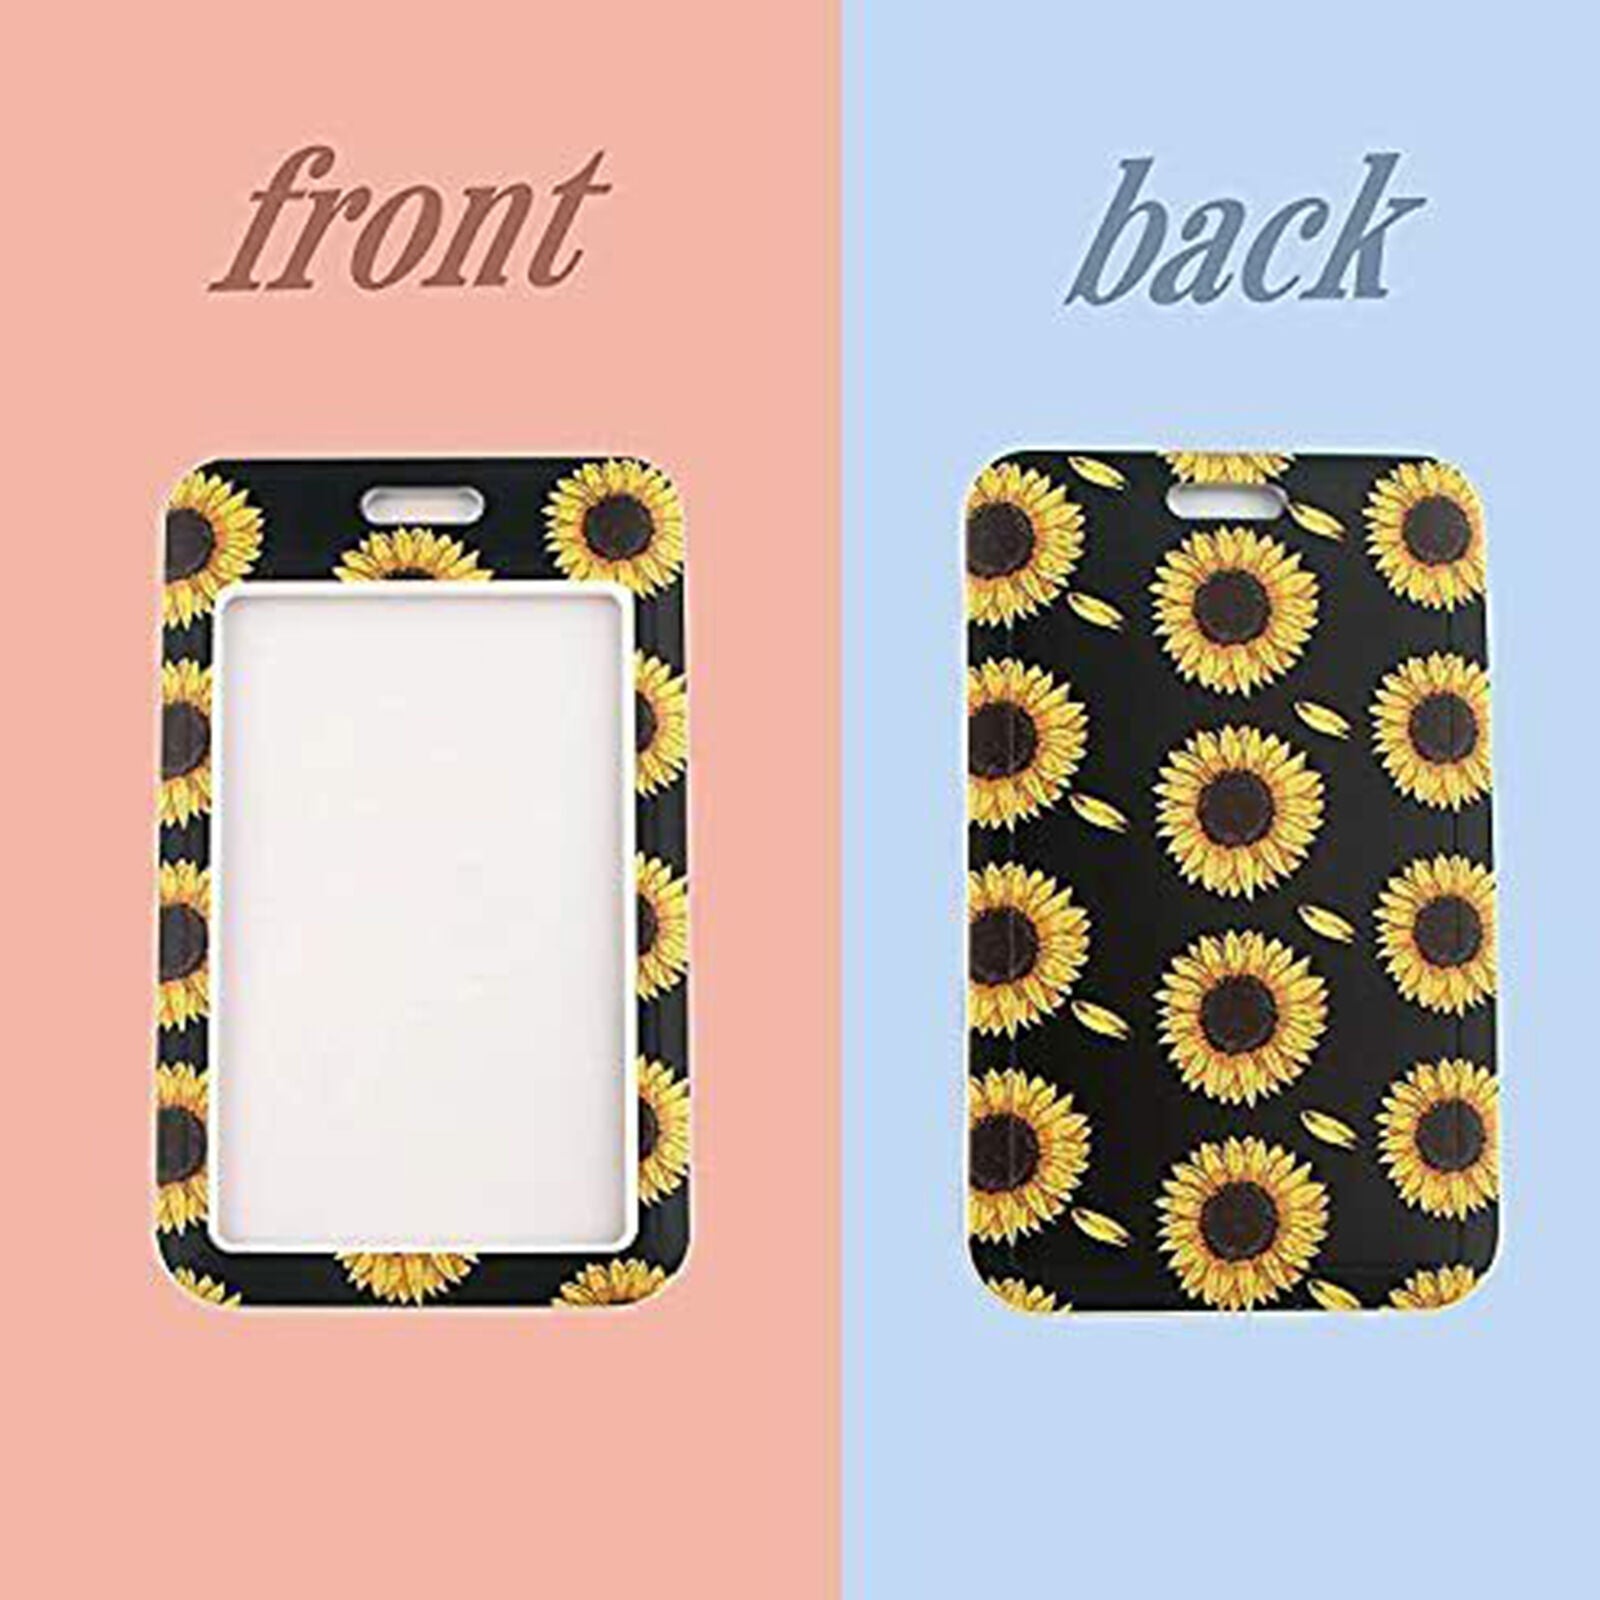 Sunflower Lanyard for Keys with Embossed ID Holder Premium Soft Fabric Neck